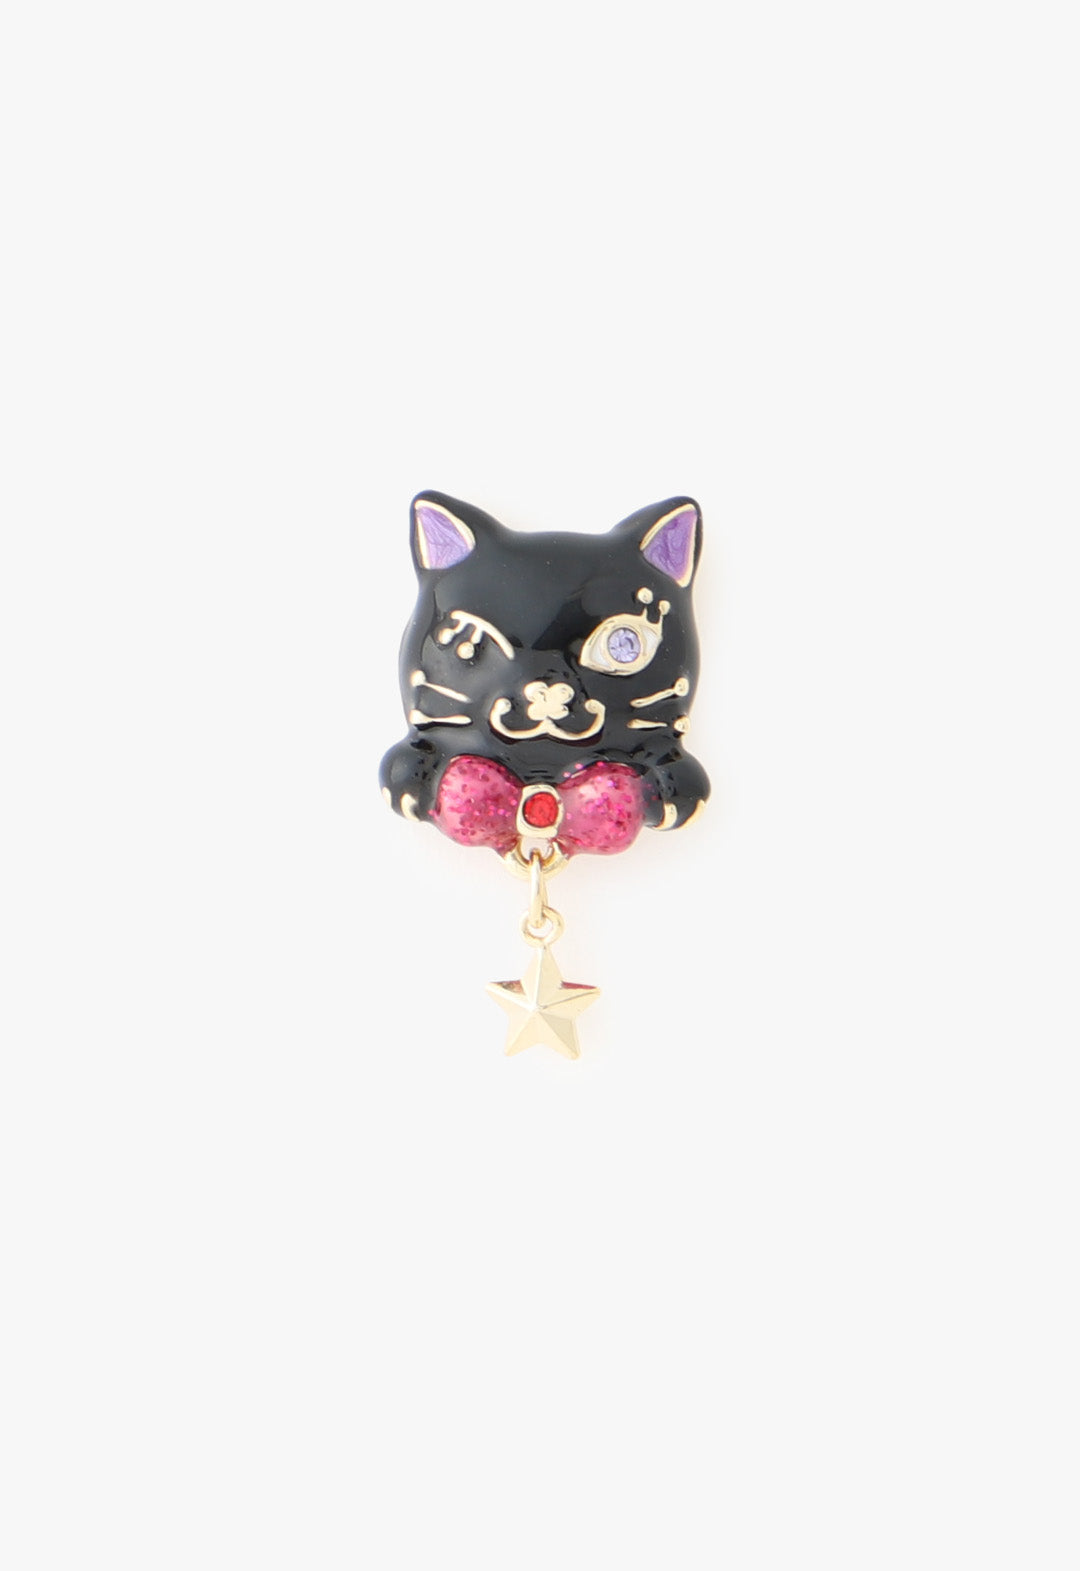 Cat Charm Earrings - Black